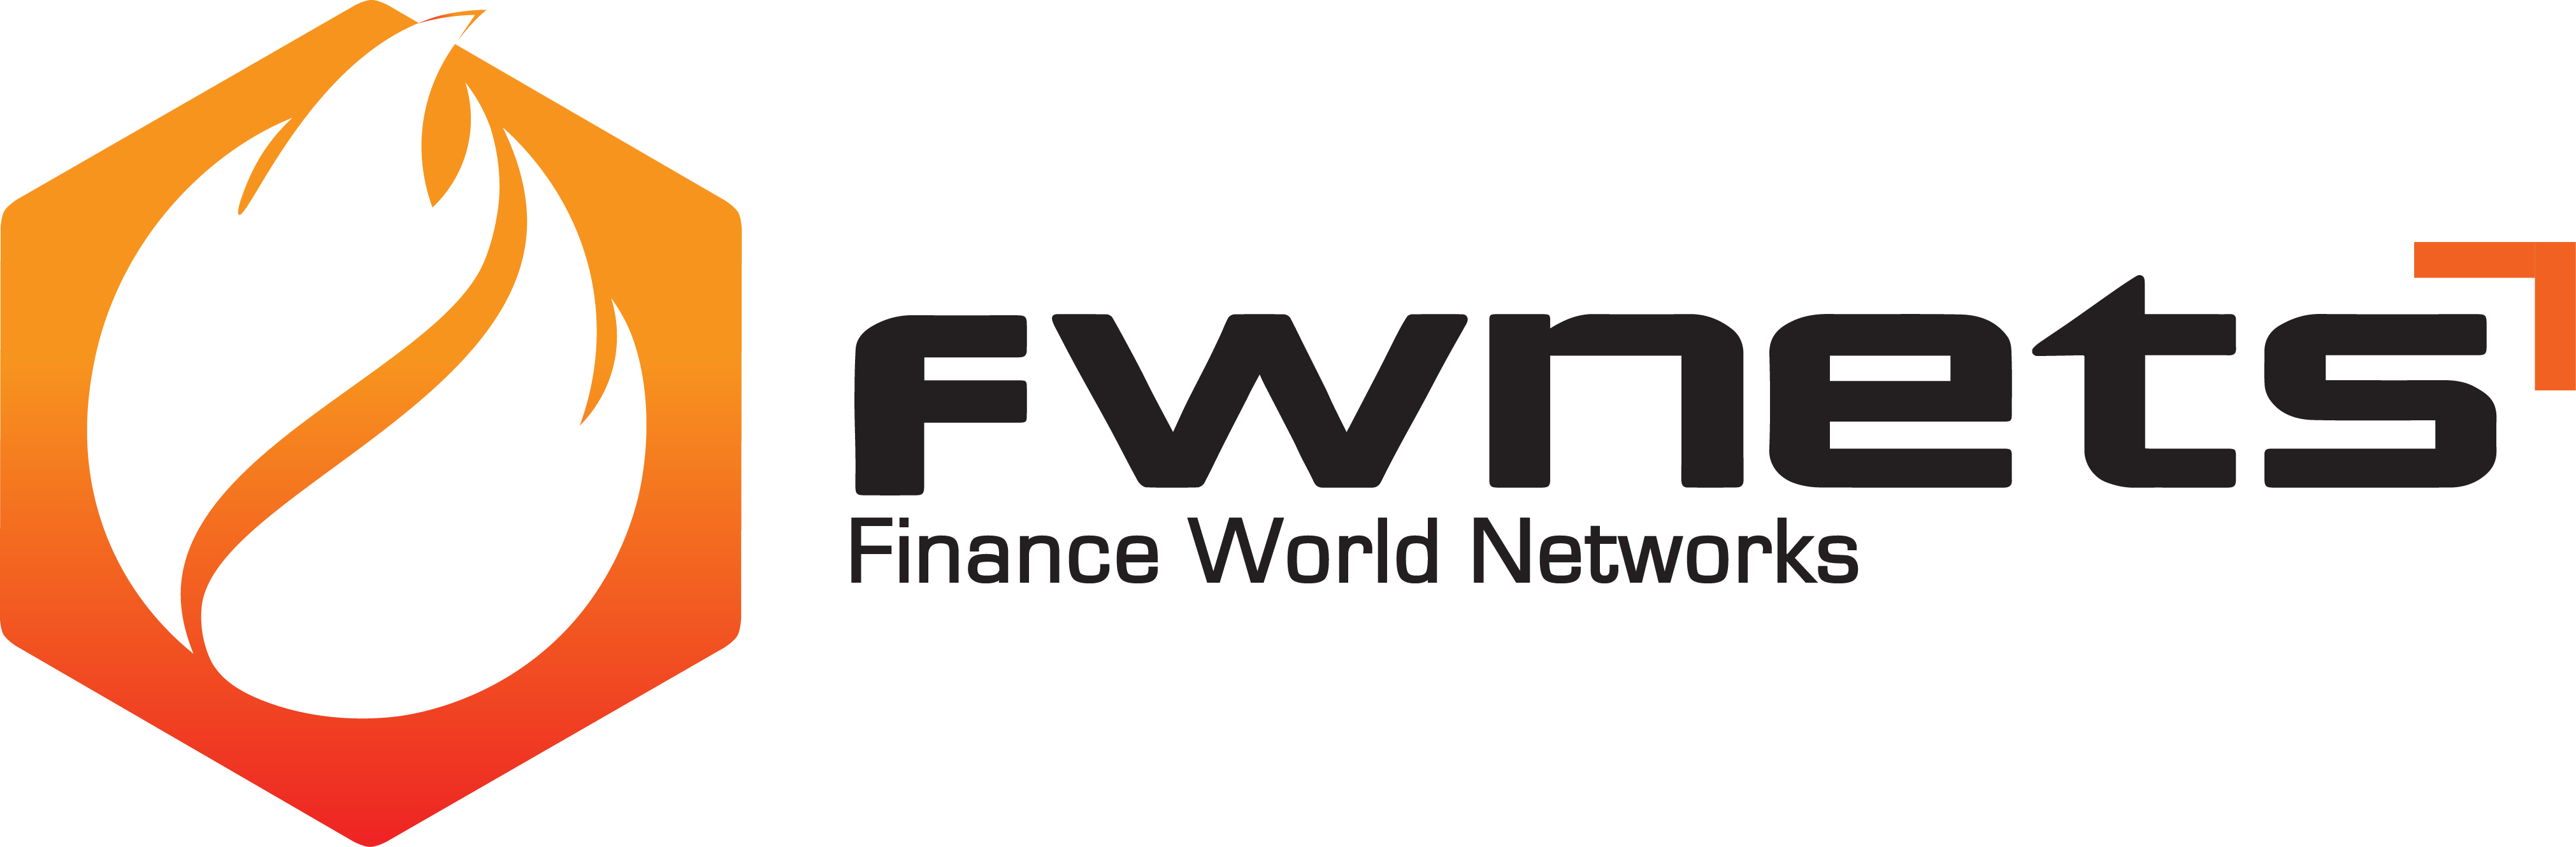 fwnets logo